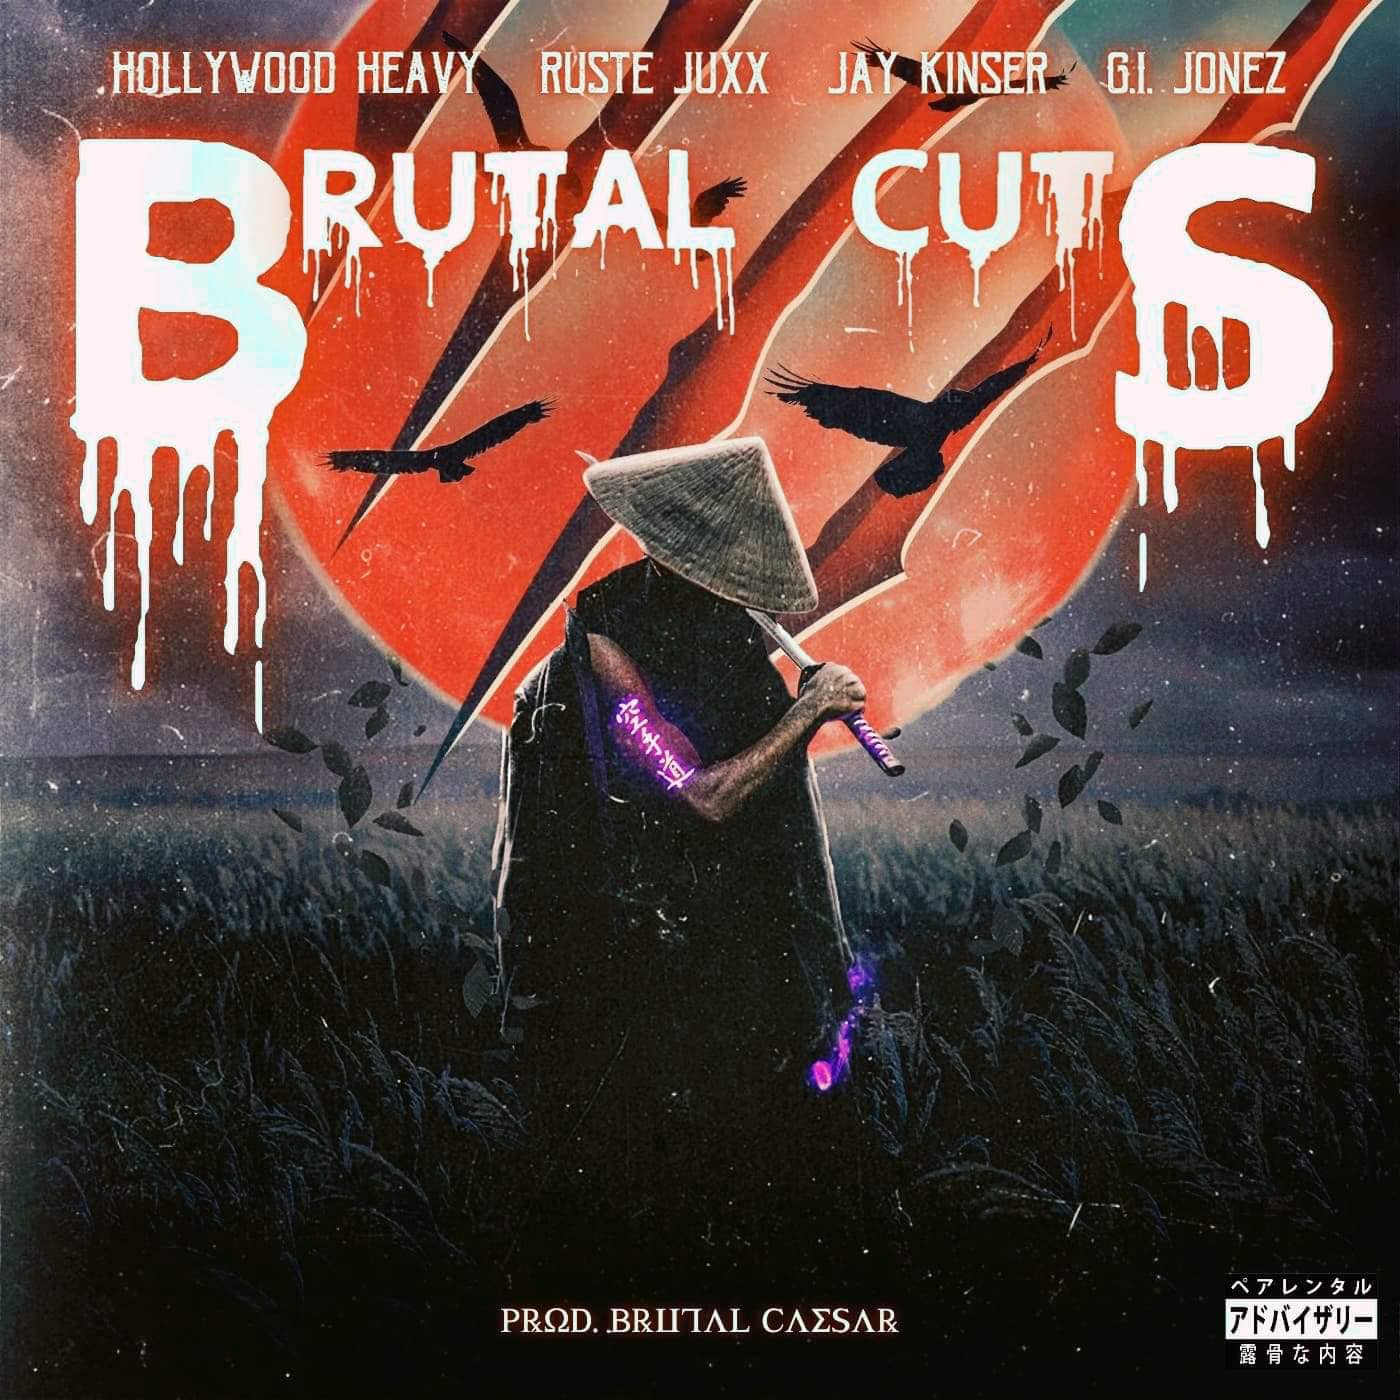 Hollywood Heavy x G.I. Jonez x Jay Kinser x Ruste Juxx – “Brutal Cuts”